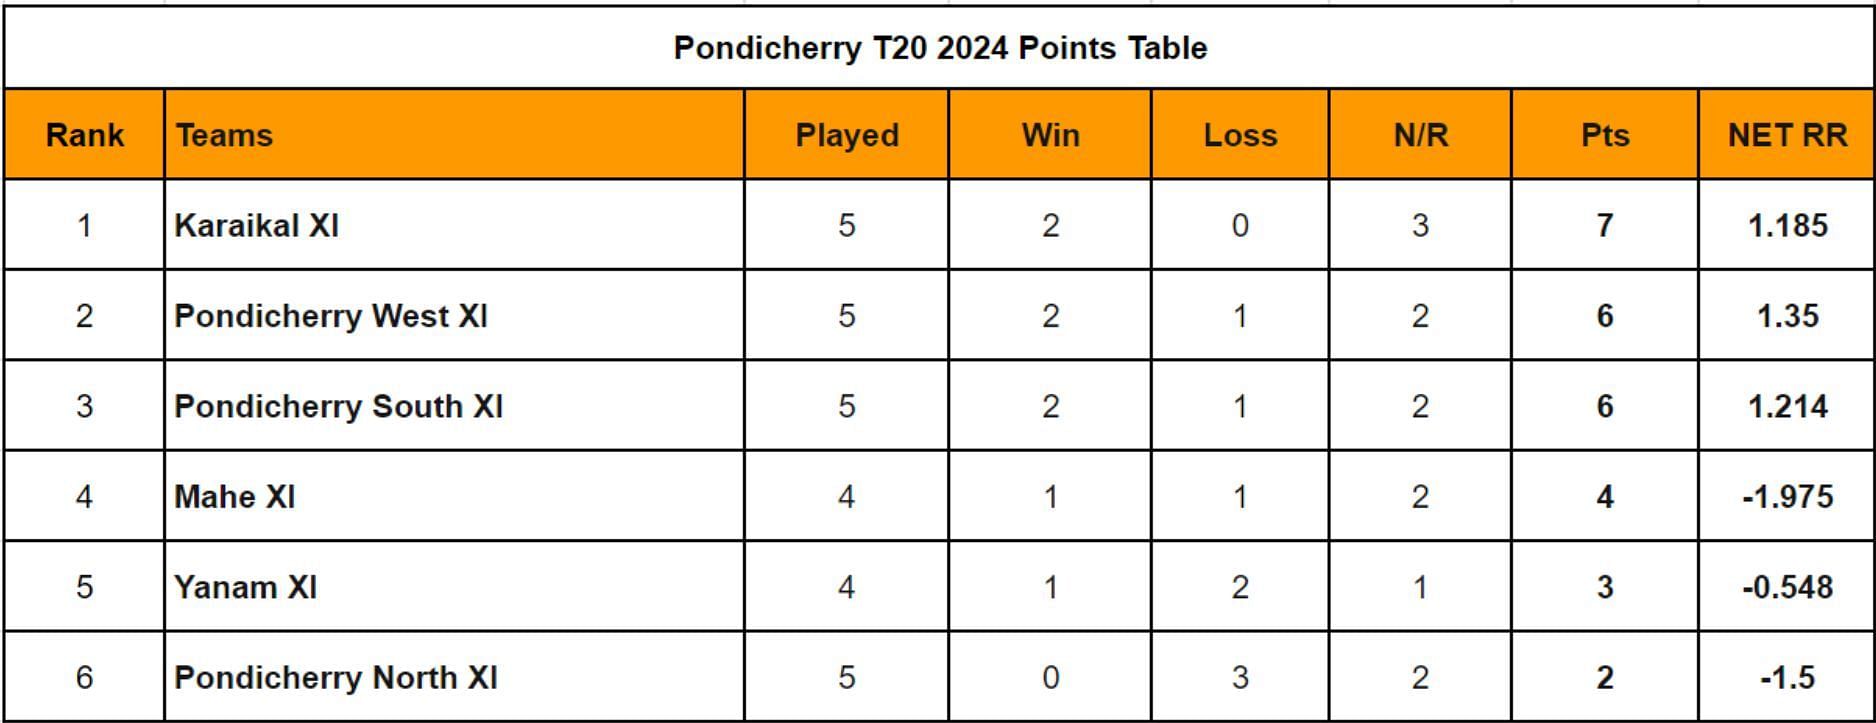 Pondicherry T20 2024 Points Table